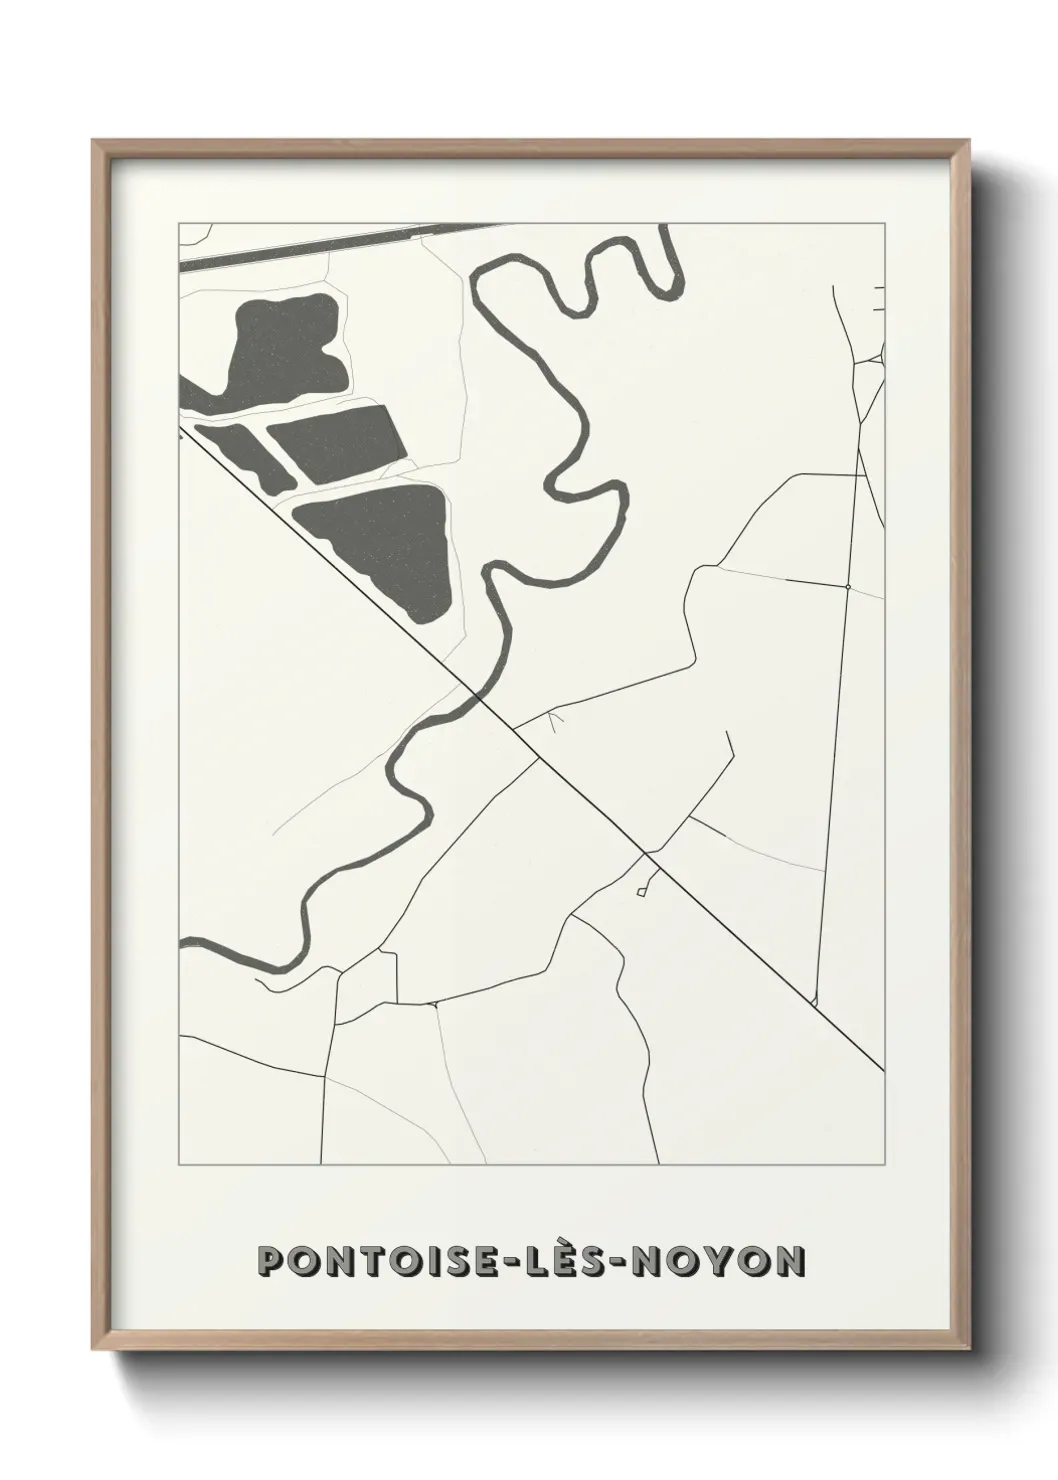 Un poster cartePontoise-lès-Noyon